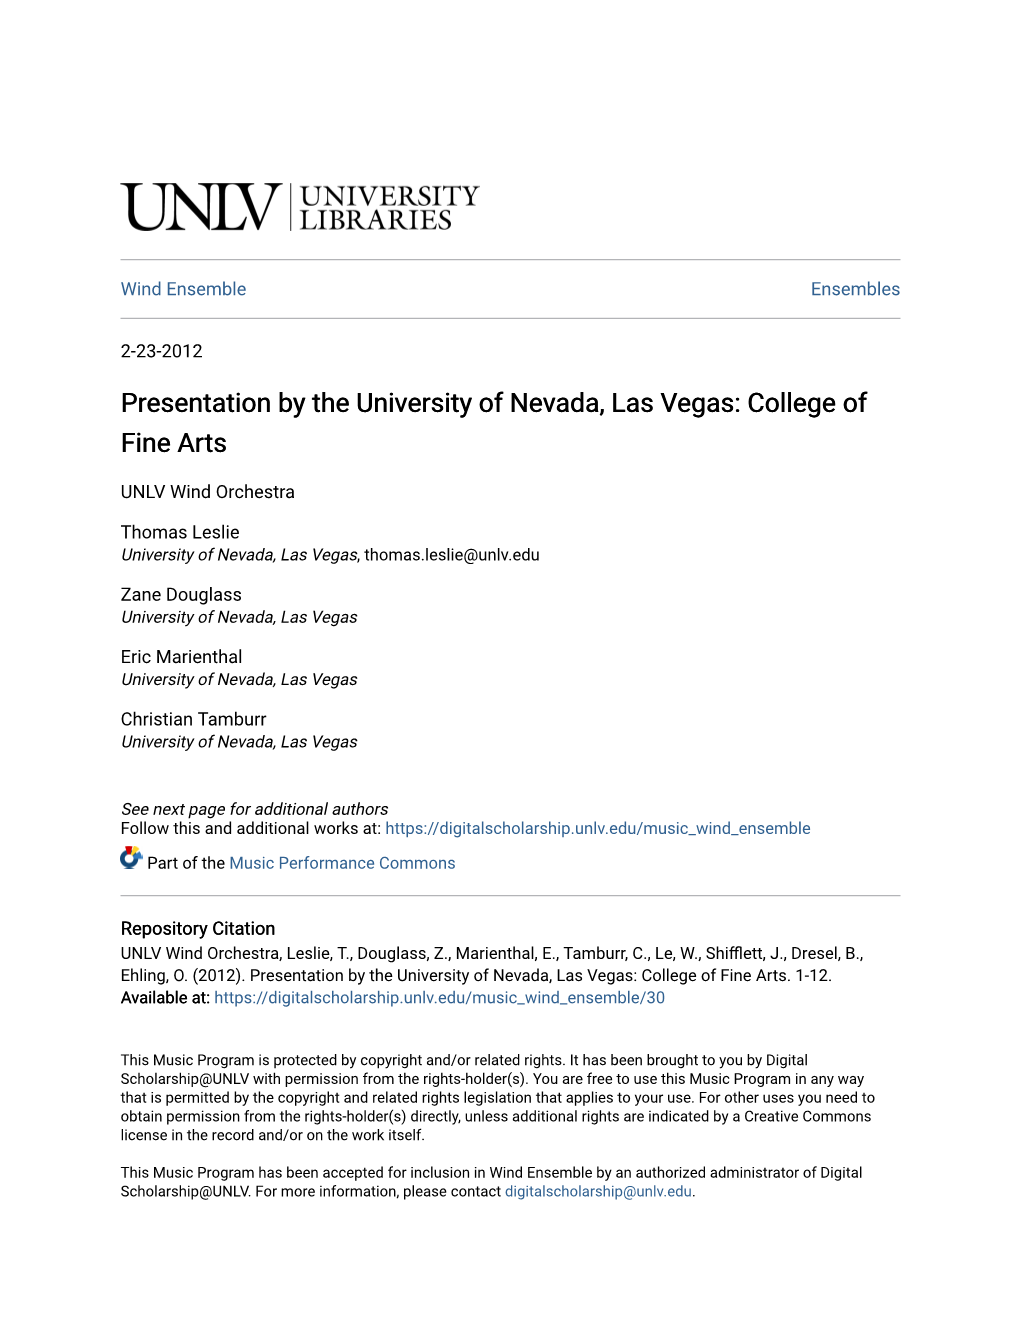 Presentation by the University of Nevada, Las Vegas: College of Fine Arts